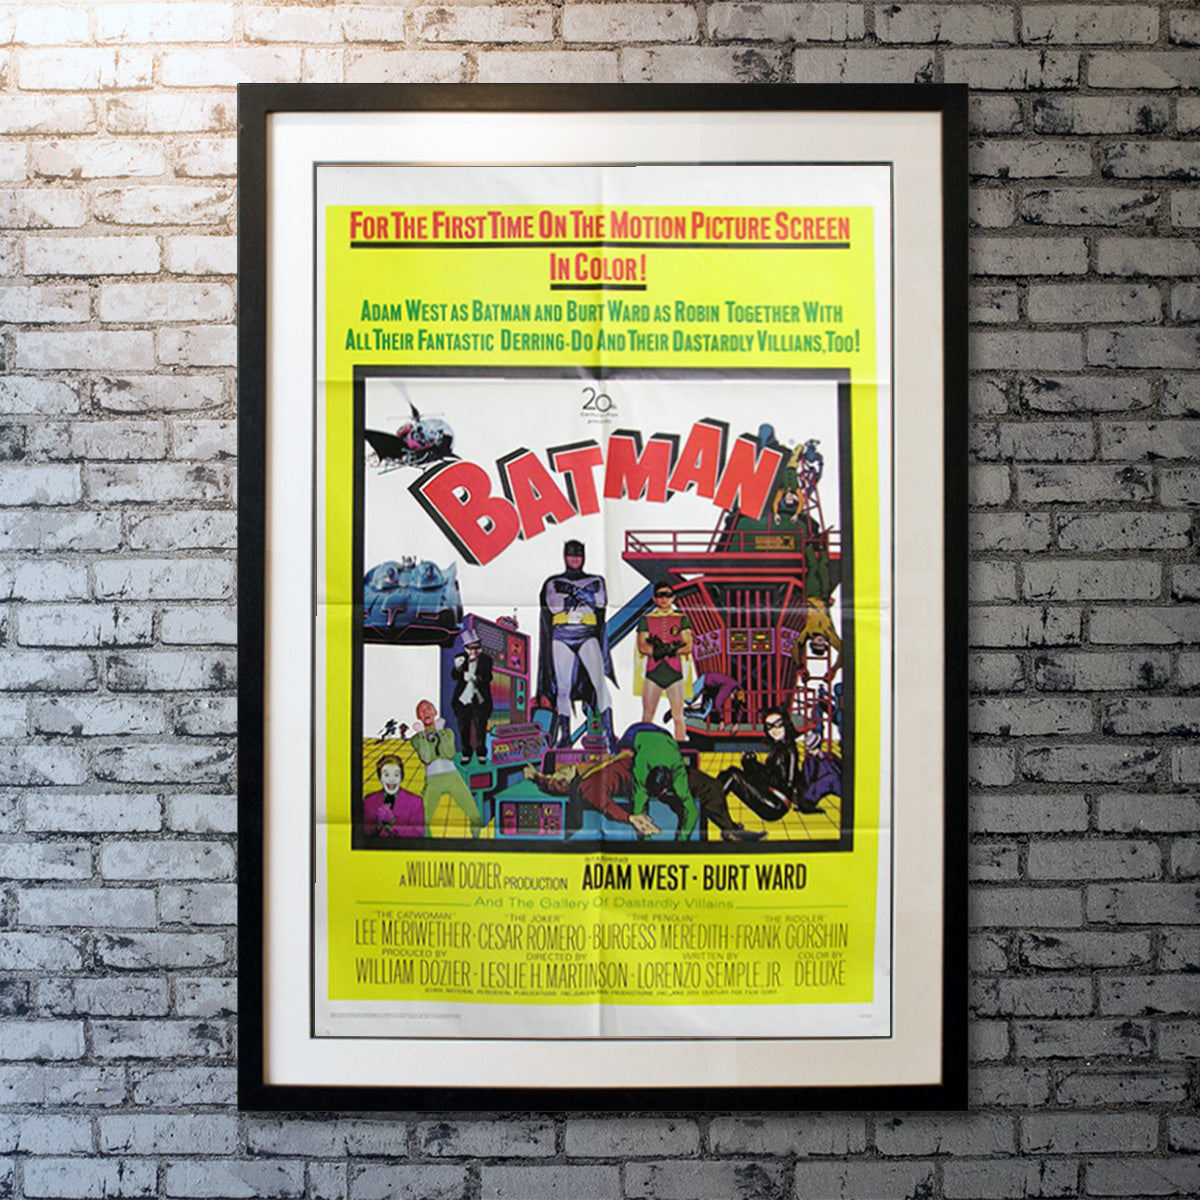 Original Movie Poster of Batman (1966)